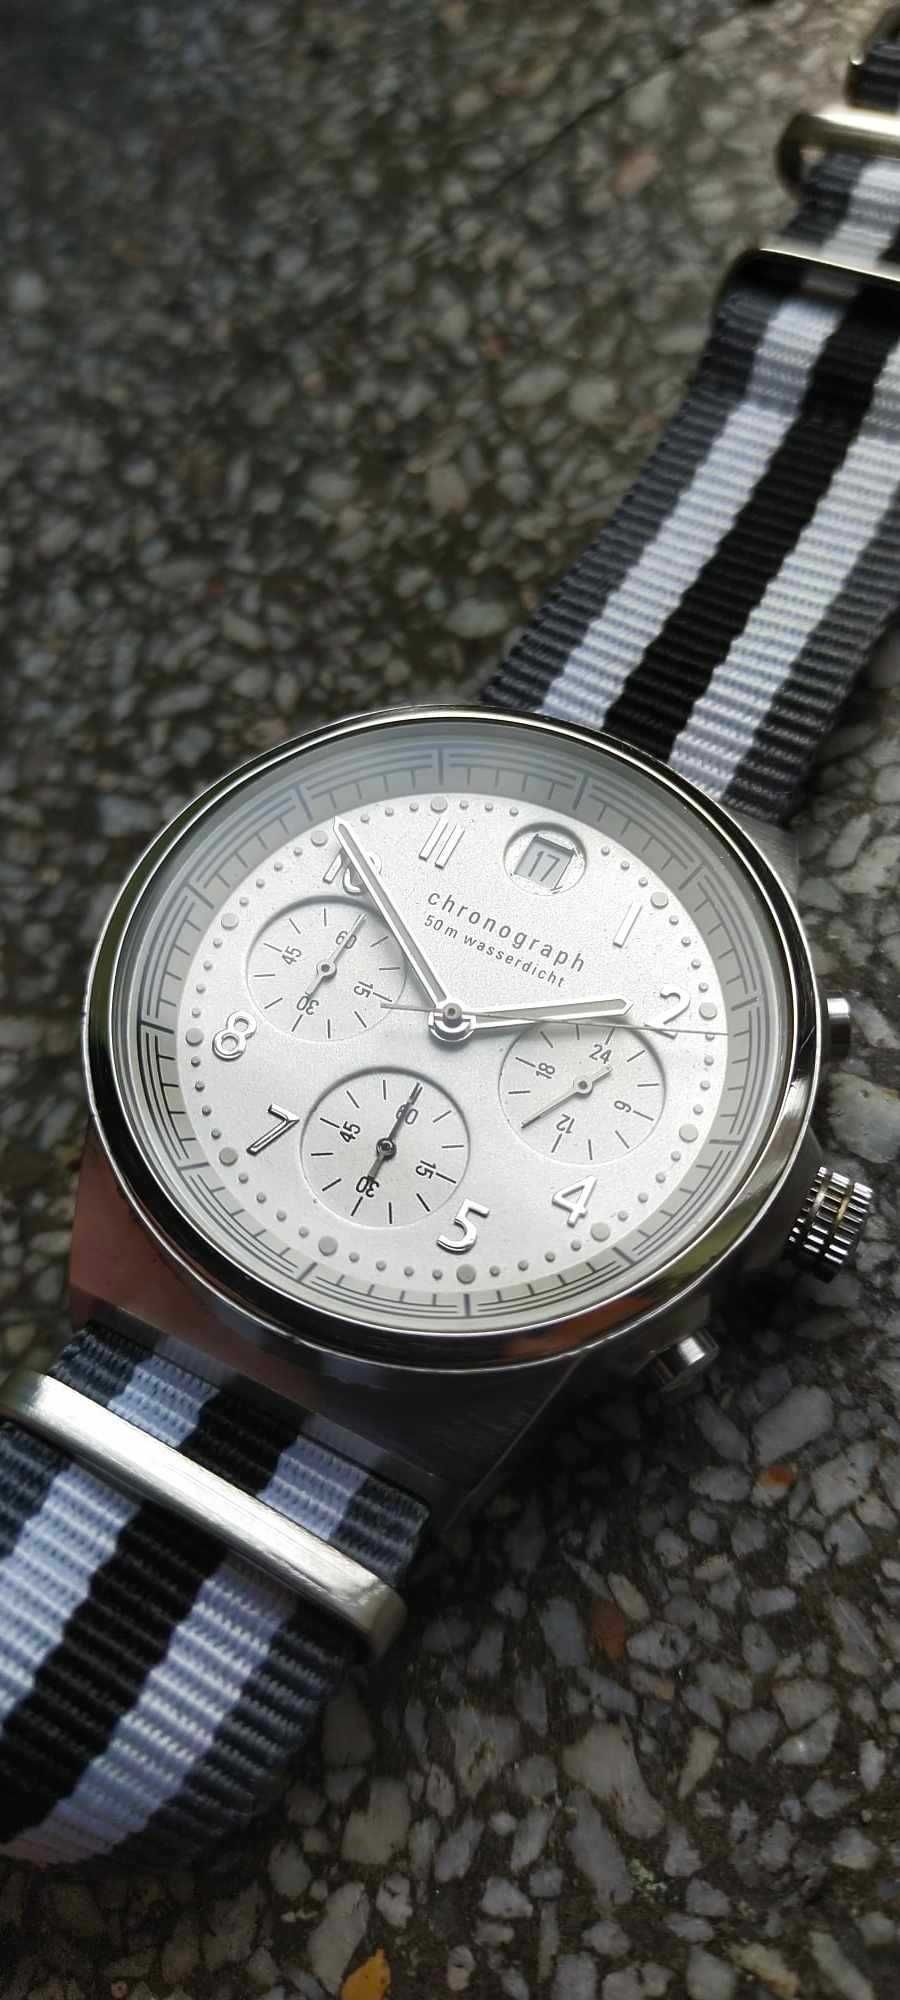 Zegarek Opel Chronograph - mechanizm Seiko nowy pasek